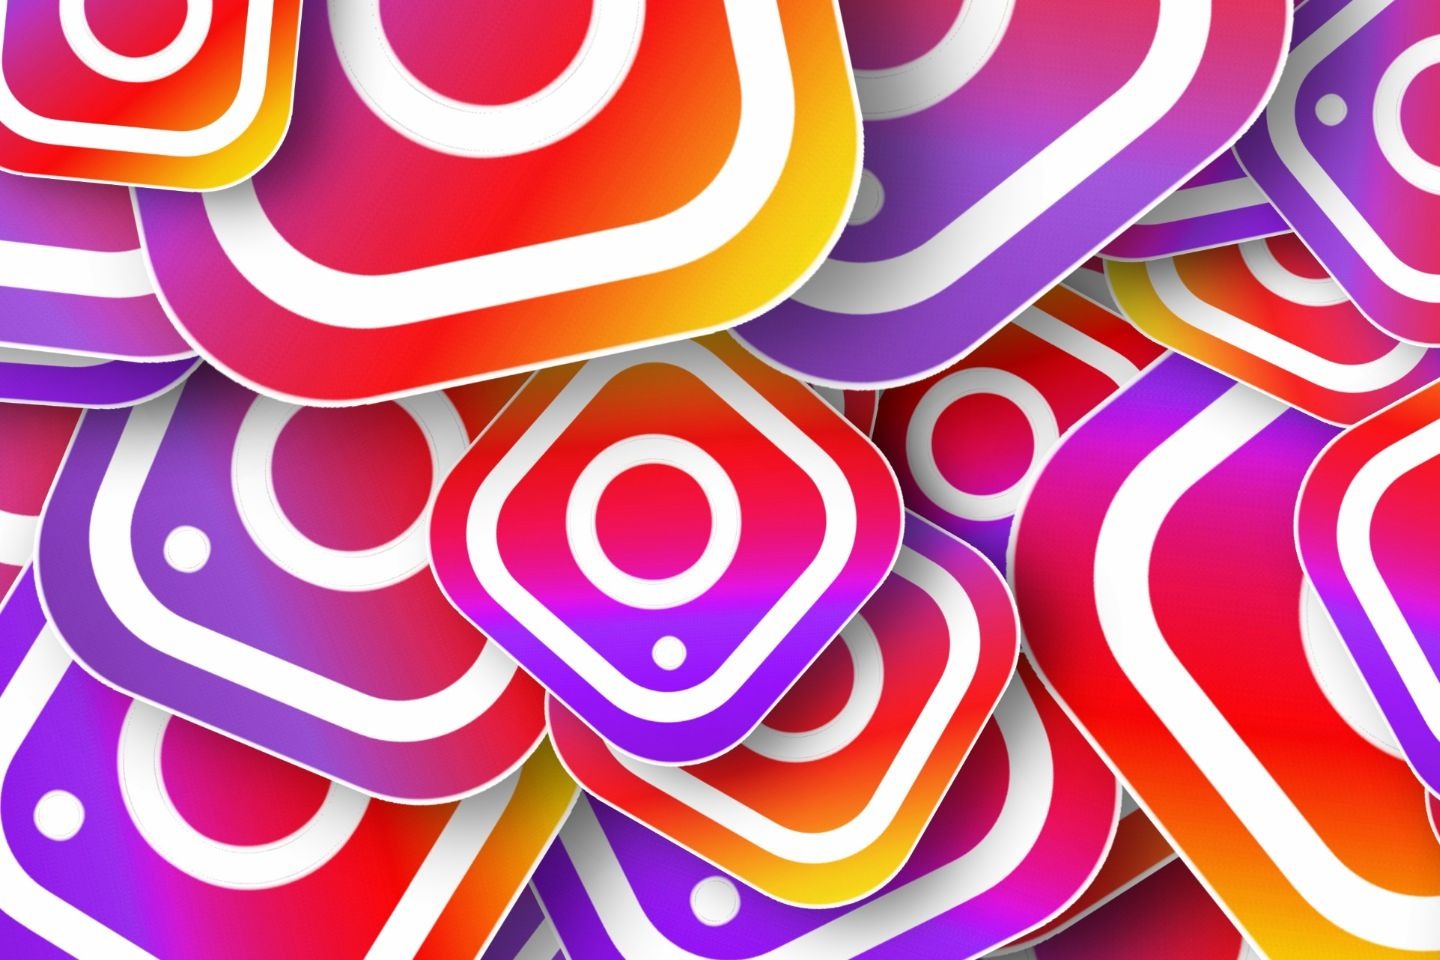 How to create custom Instagram filter